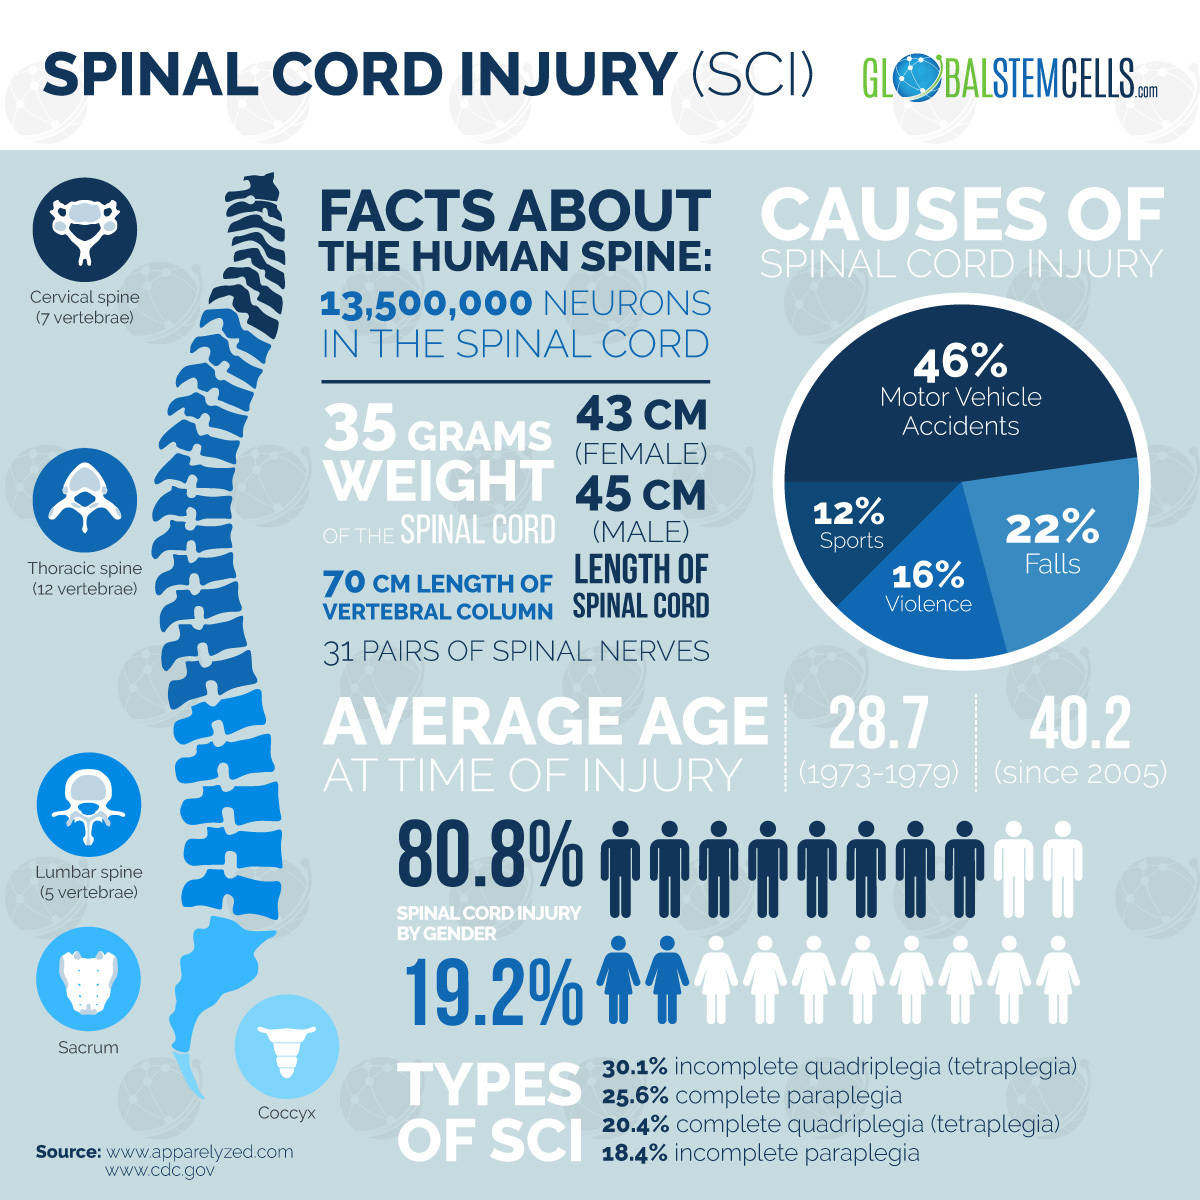 Spinal Cord Injury Statistics